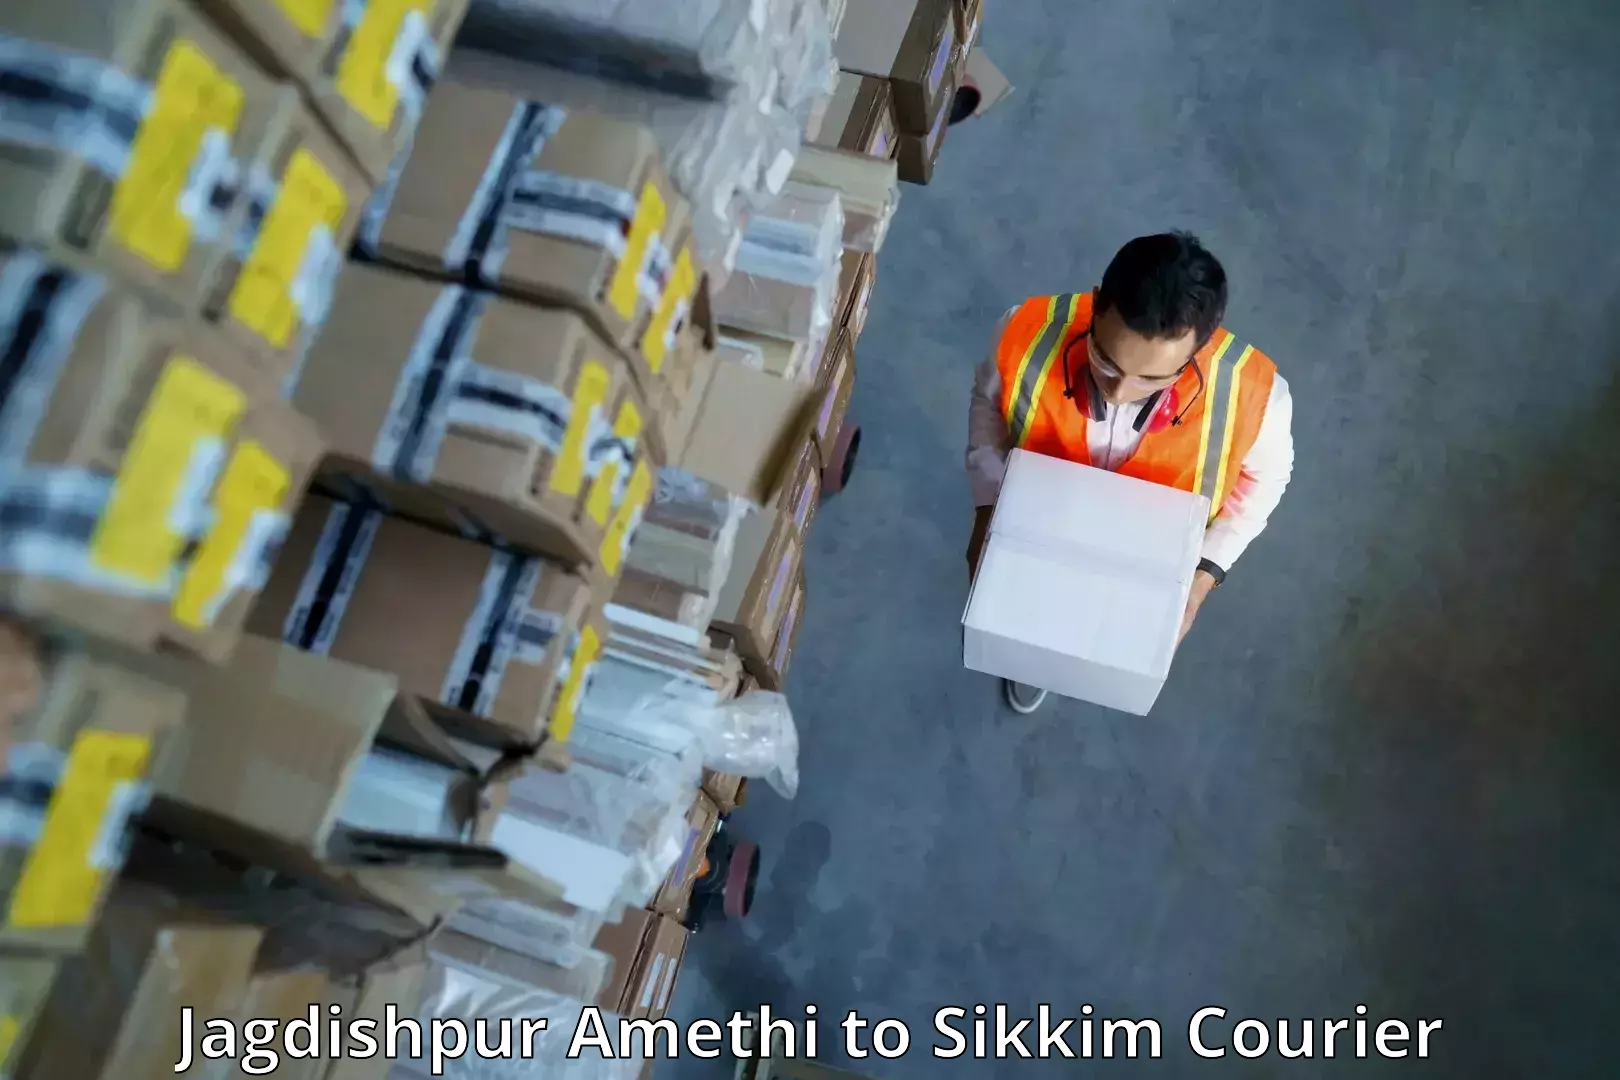 Speedy delivery service Jagdishpur Amethi to Namchi